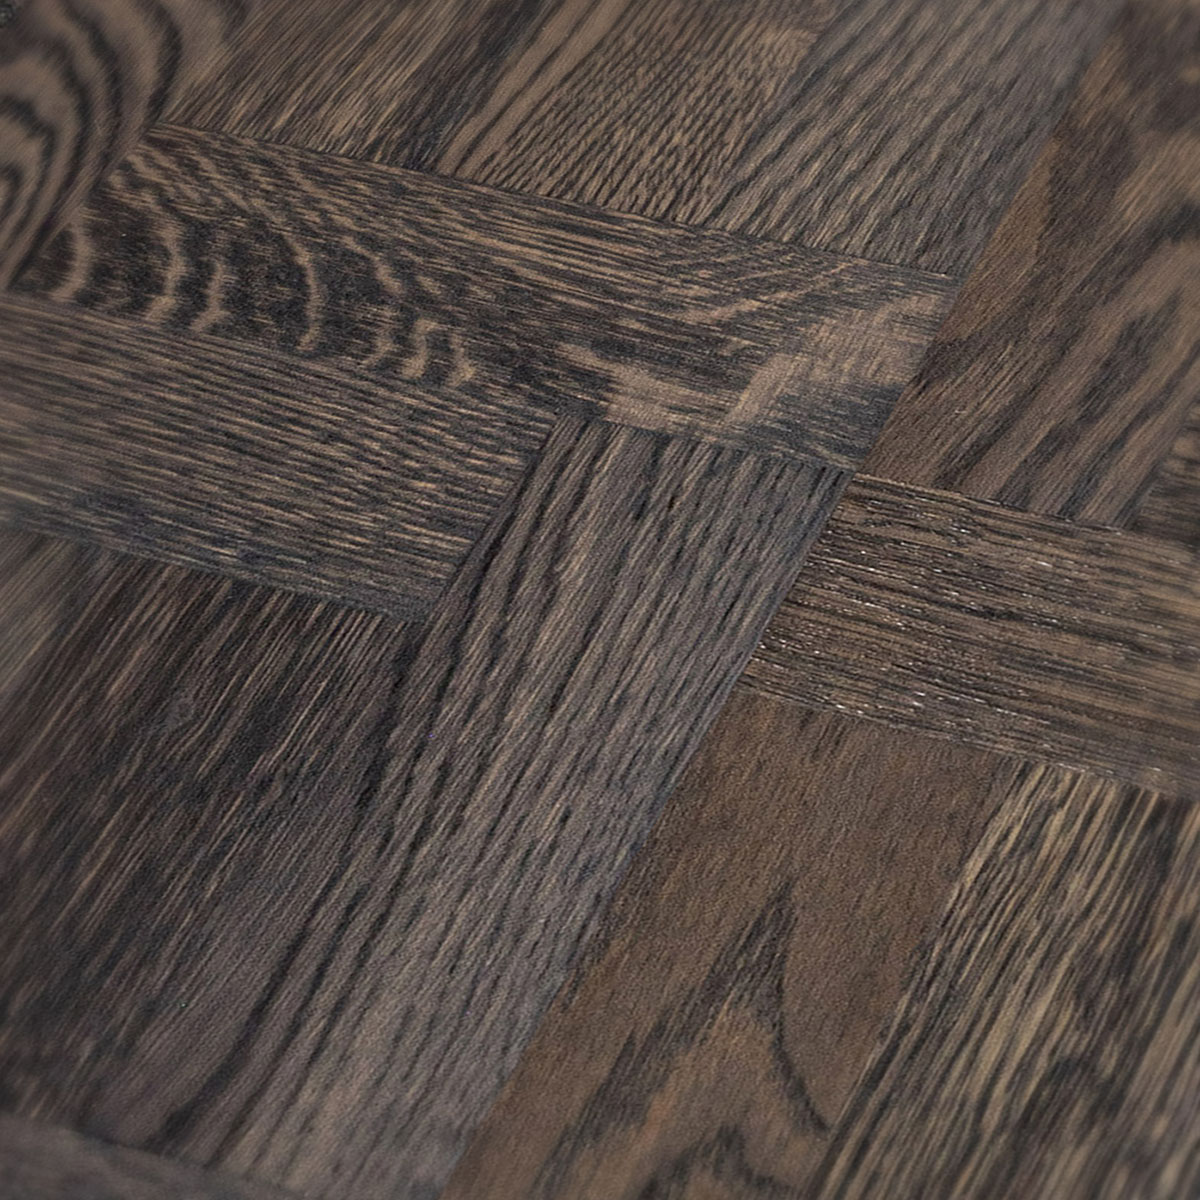 Longleat Lane - basket-woven parquet floor close-up